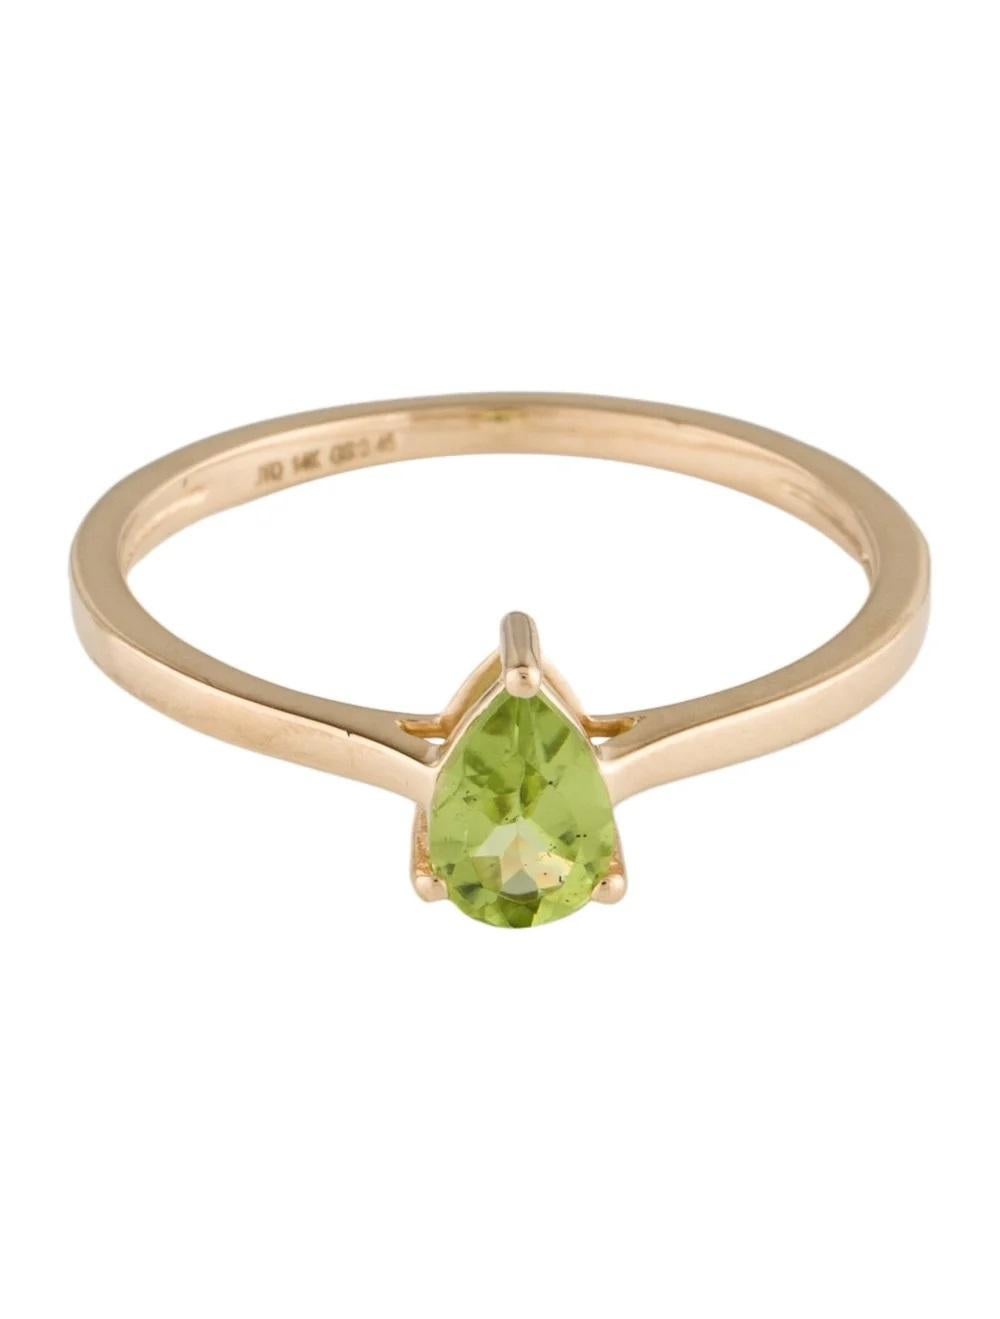 Pear Cut 14K Peridot Cocktail Ring, Size 6.75 - Green Gemstone, Timeless Design, Elegant For Sale